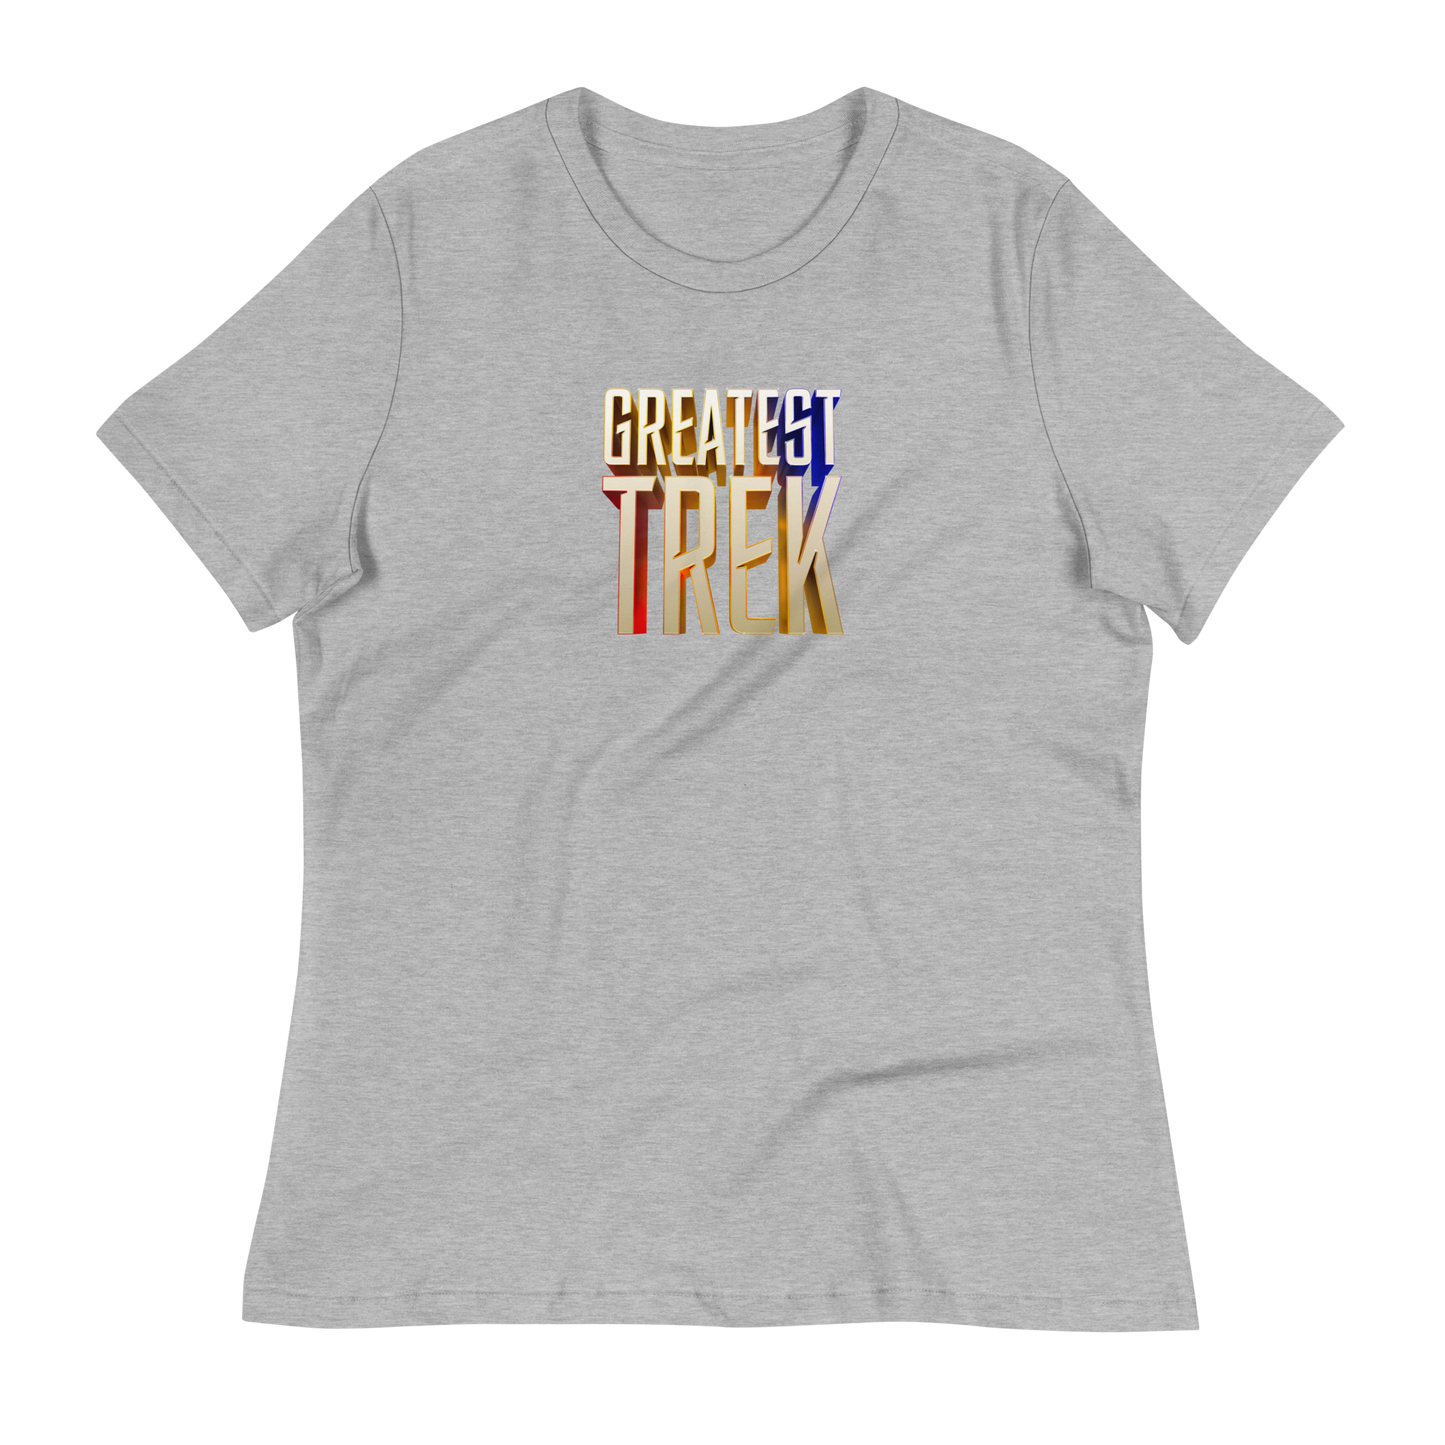 Greatest Trek Relaxed Fit T-Shirt